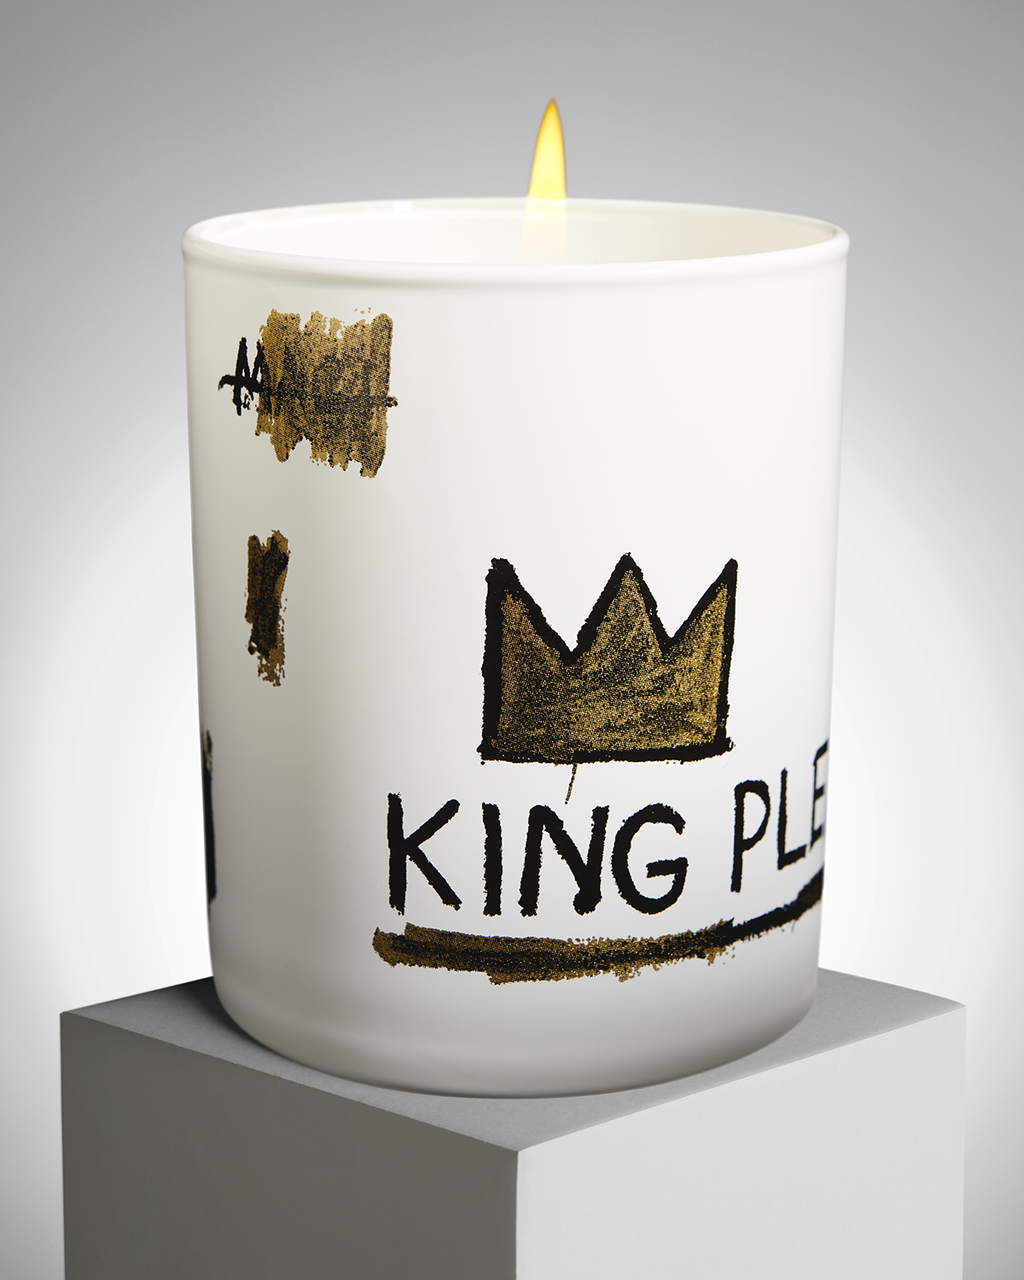 Jean-Michel basquiat "KING PLEASURE" PERFUMED CANDLE